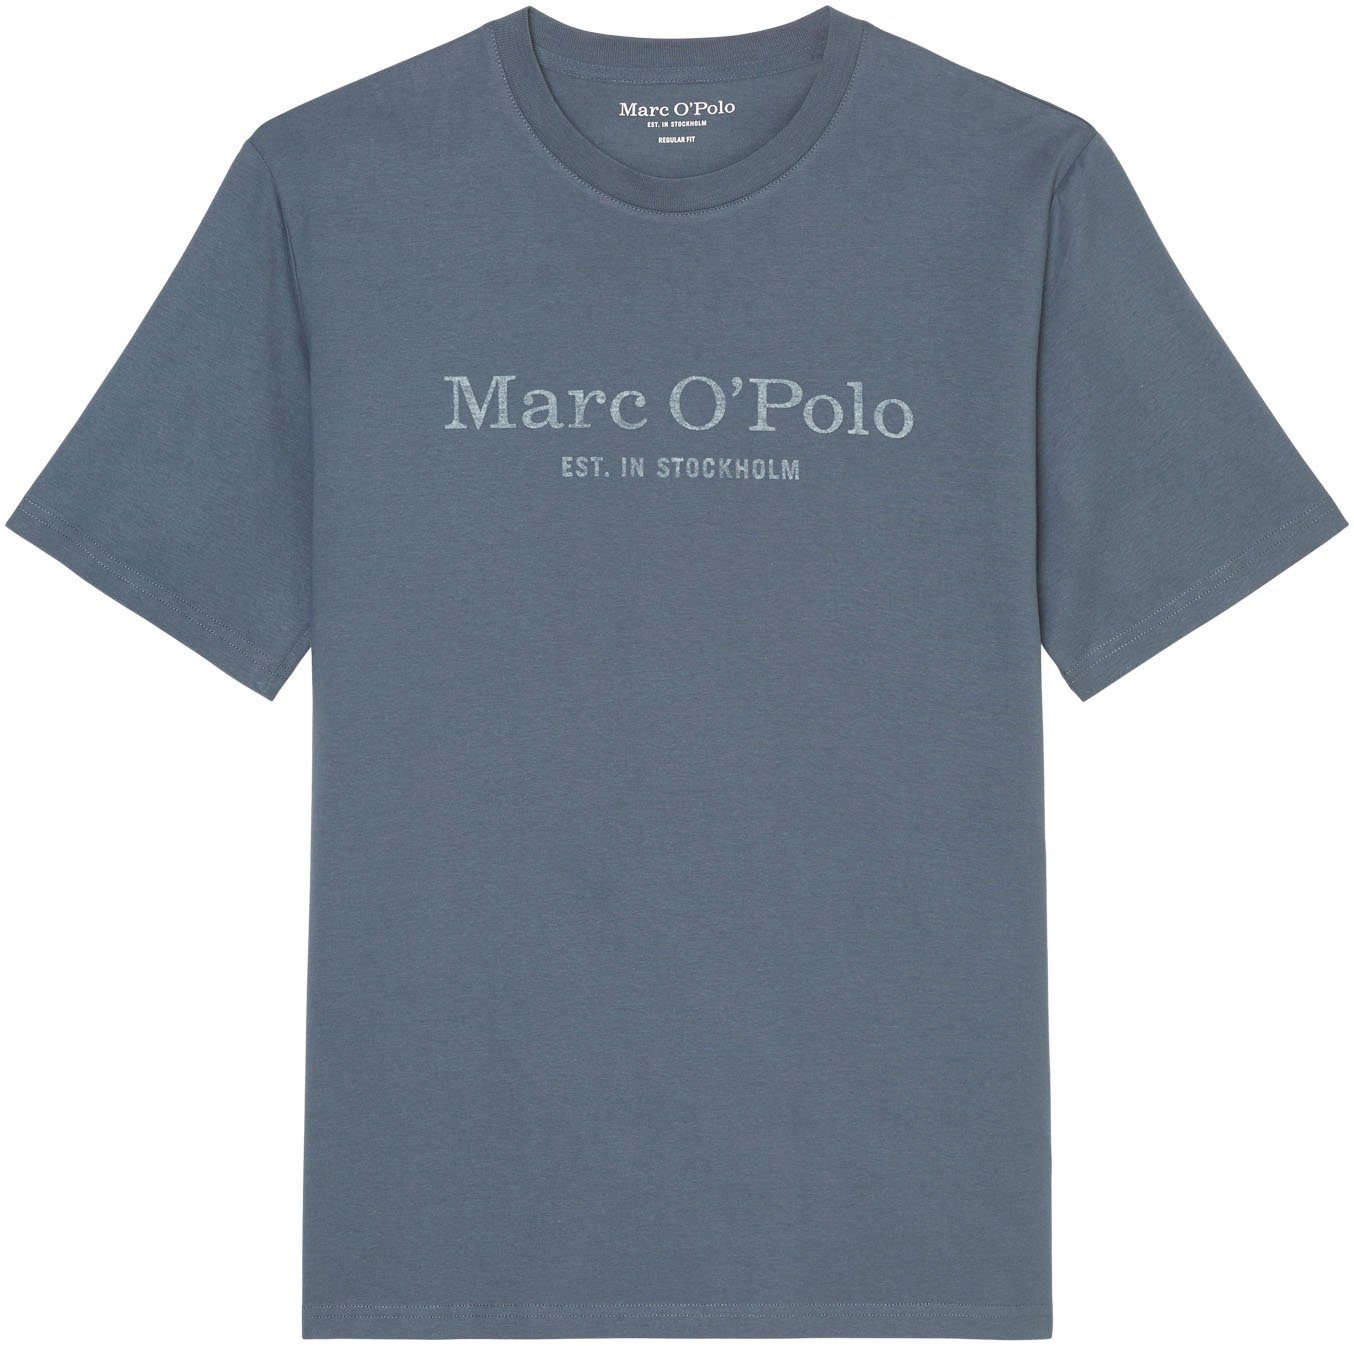 Marc O'Polo T-Shirt dunkelgrau